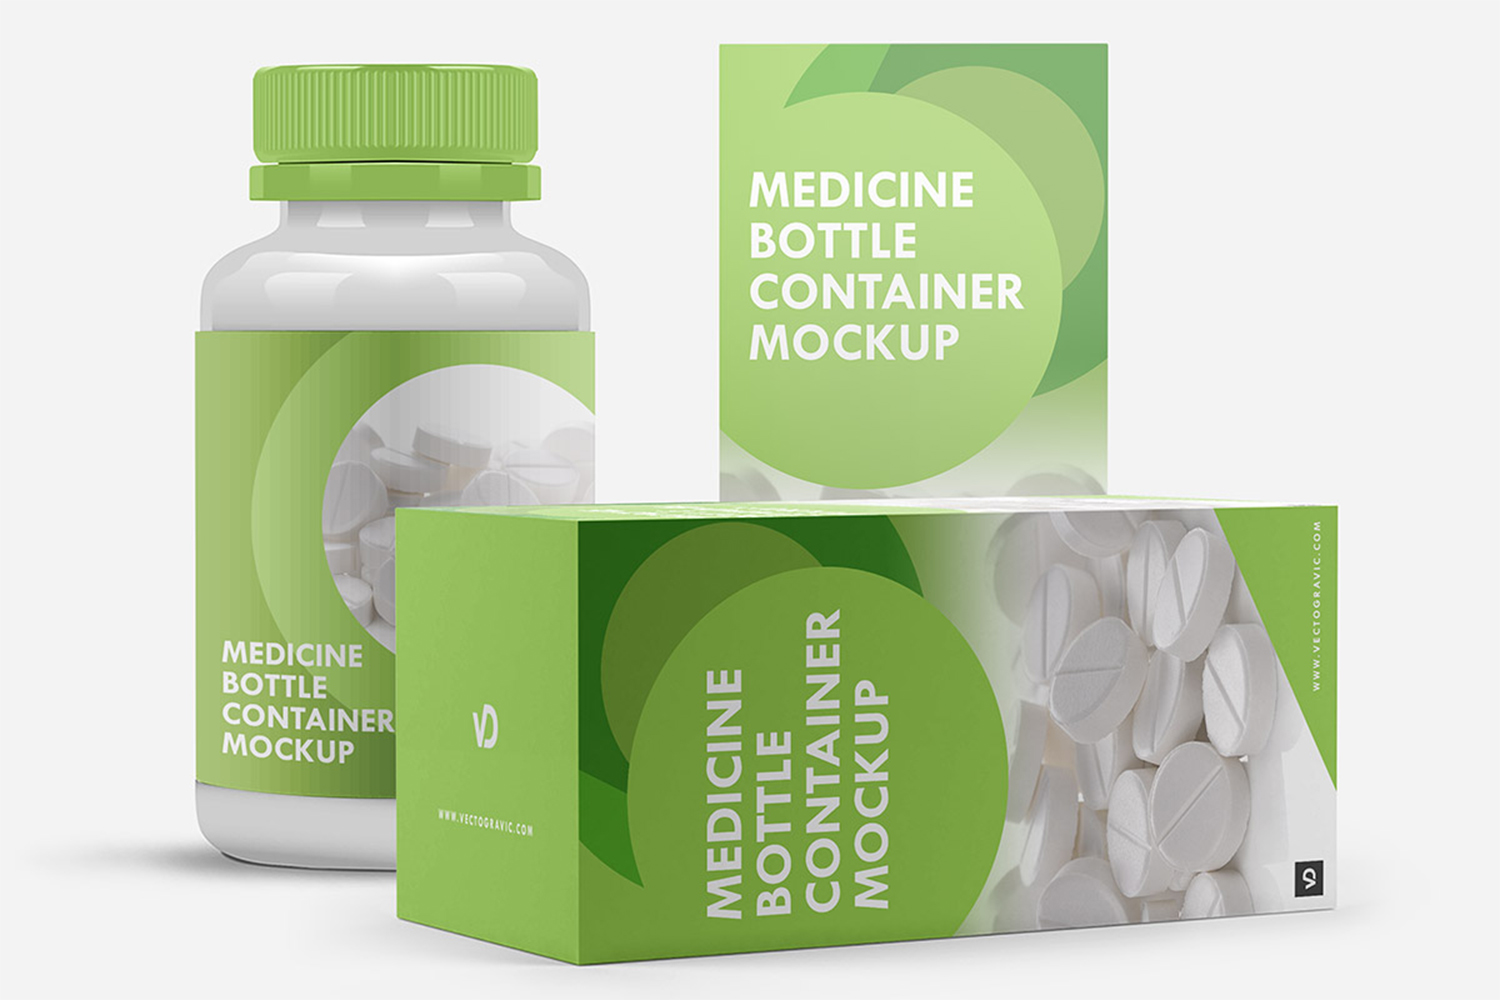 Medicine Bottle Container Mockup Free Download